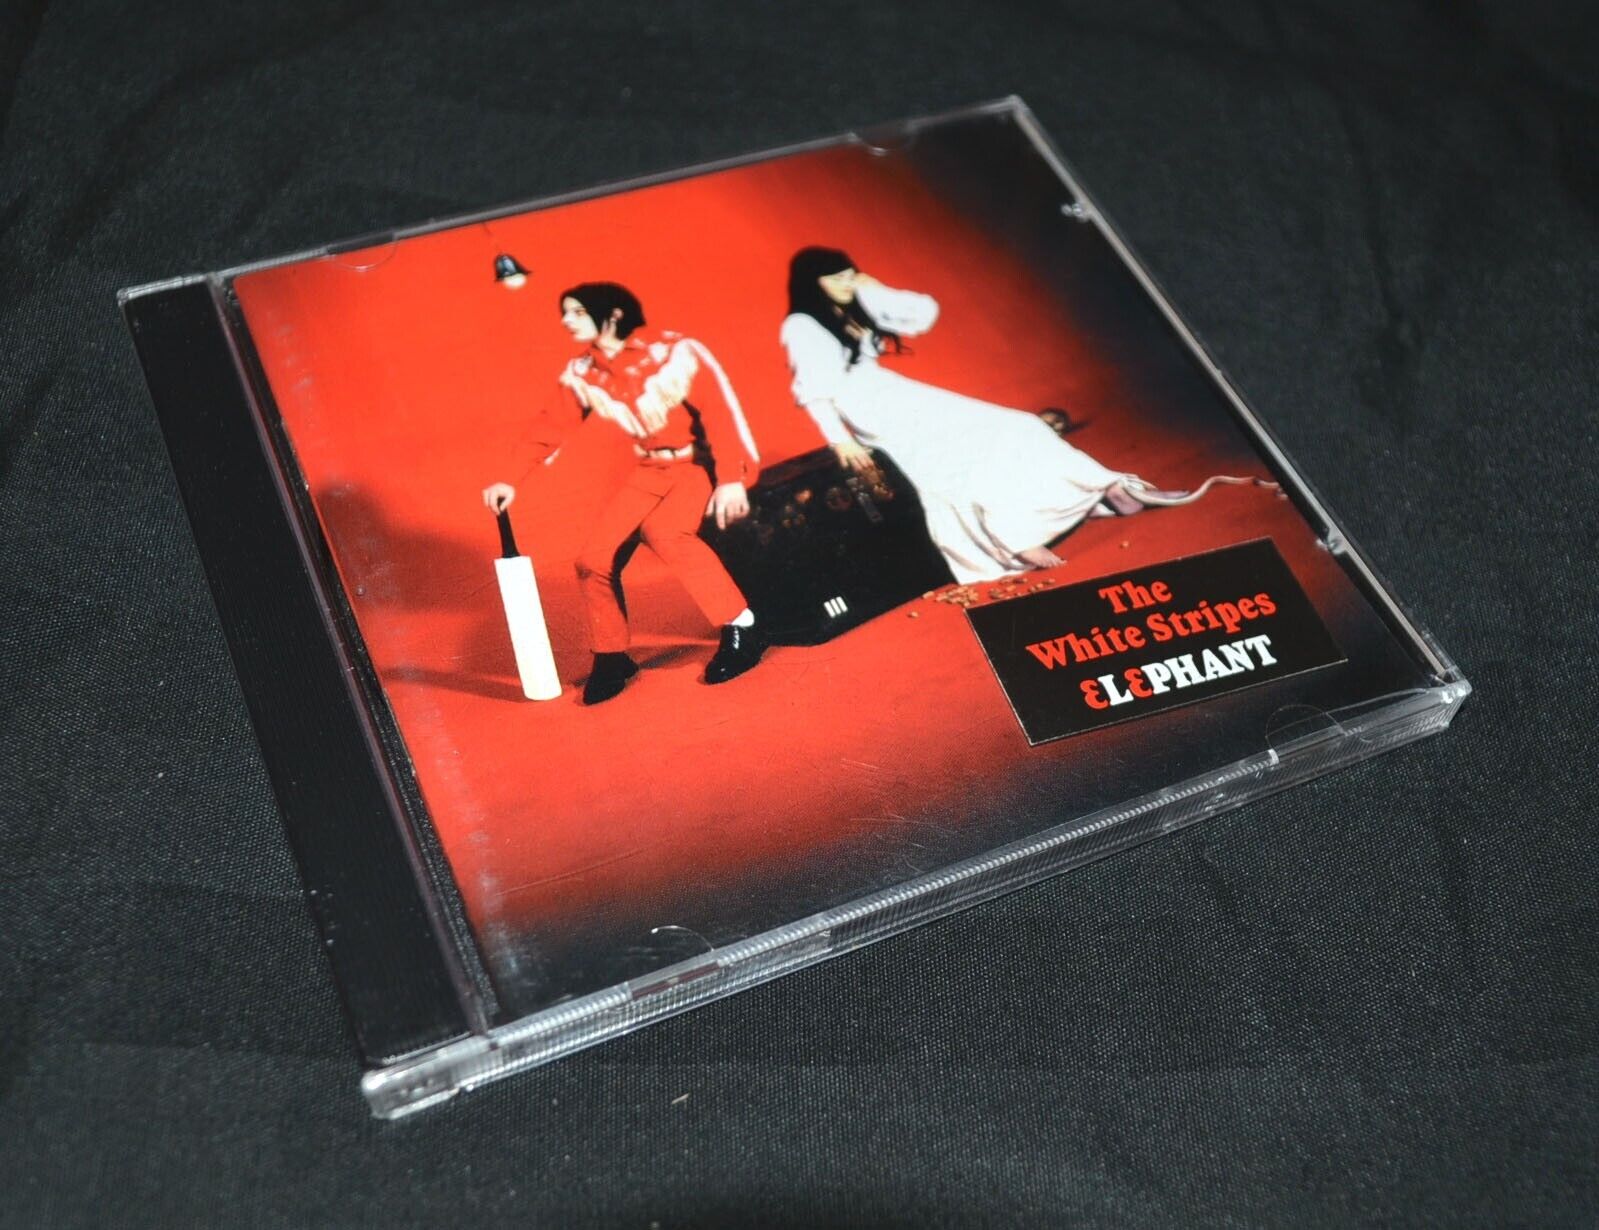 CD Album The White Stripes #4 Elephant 2003